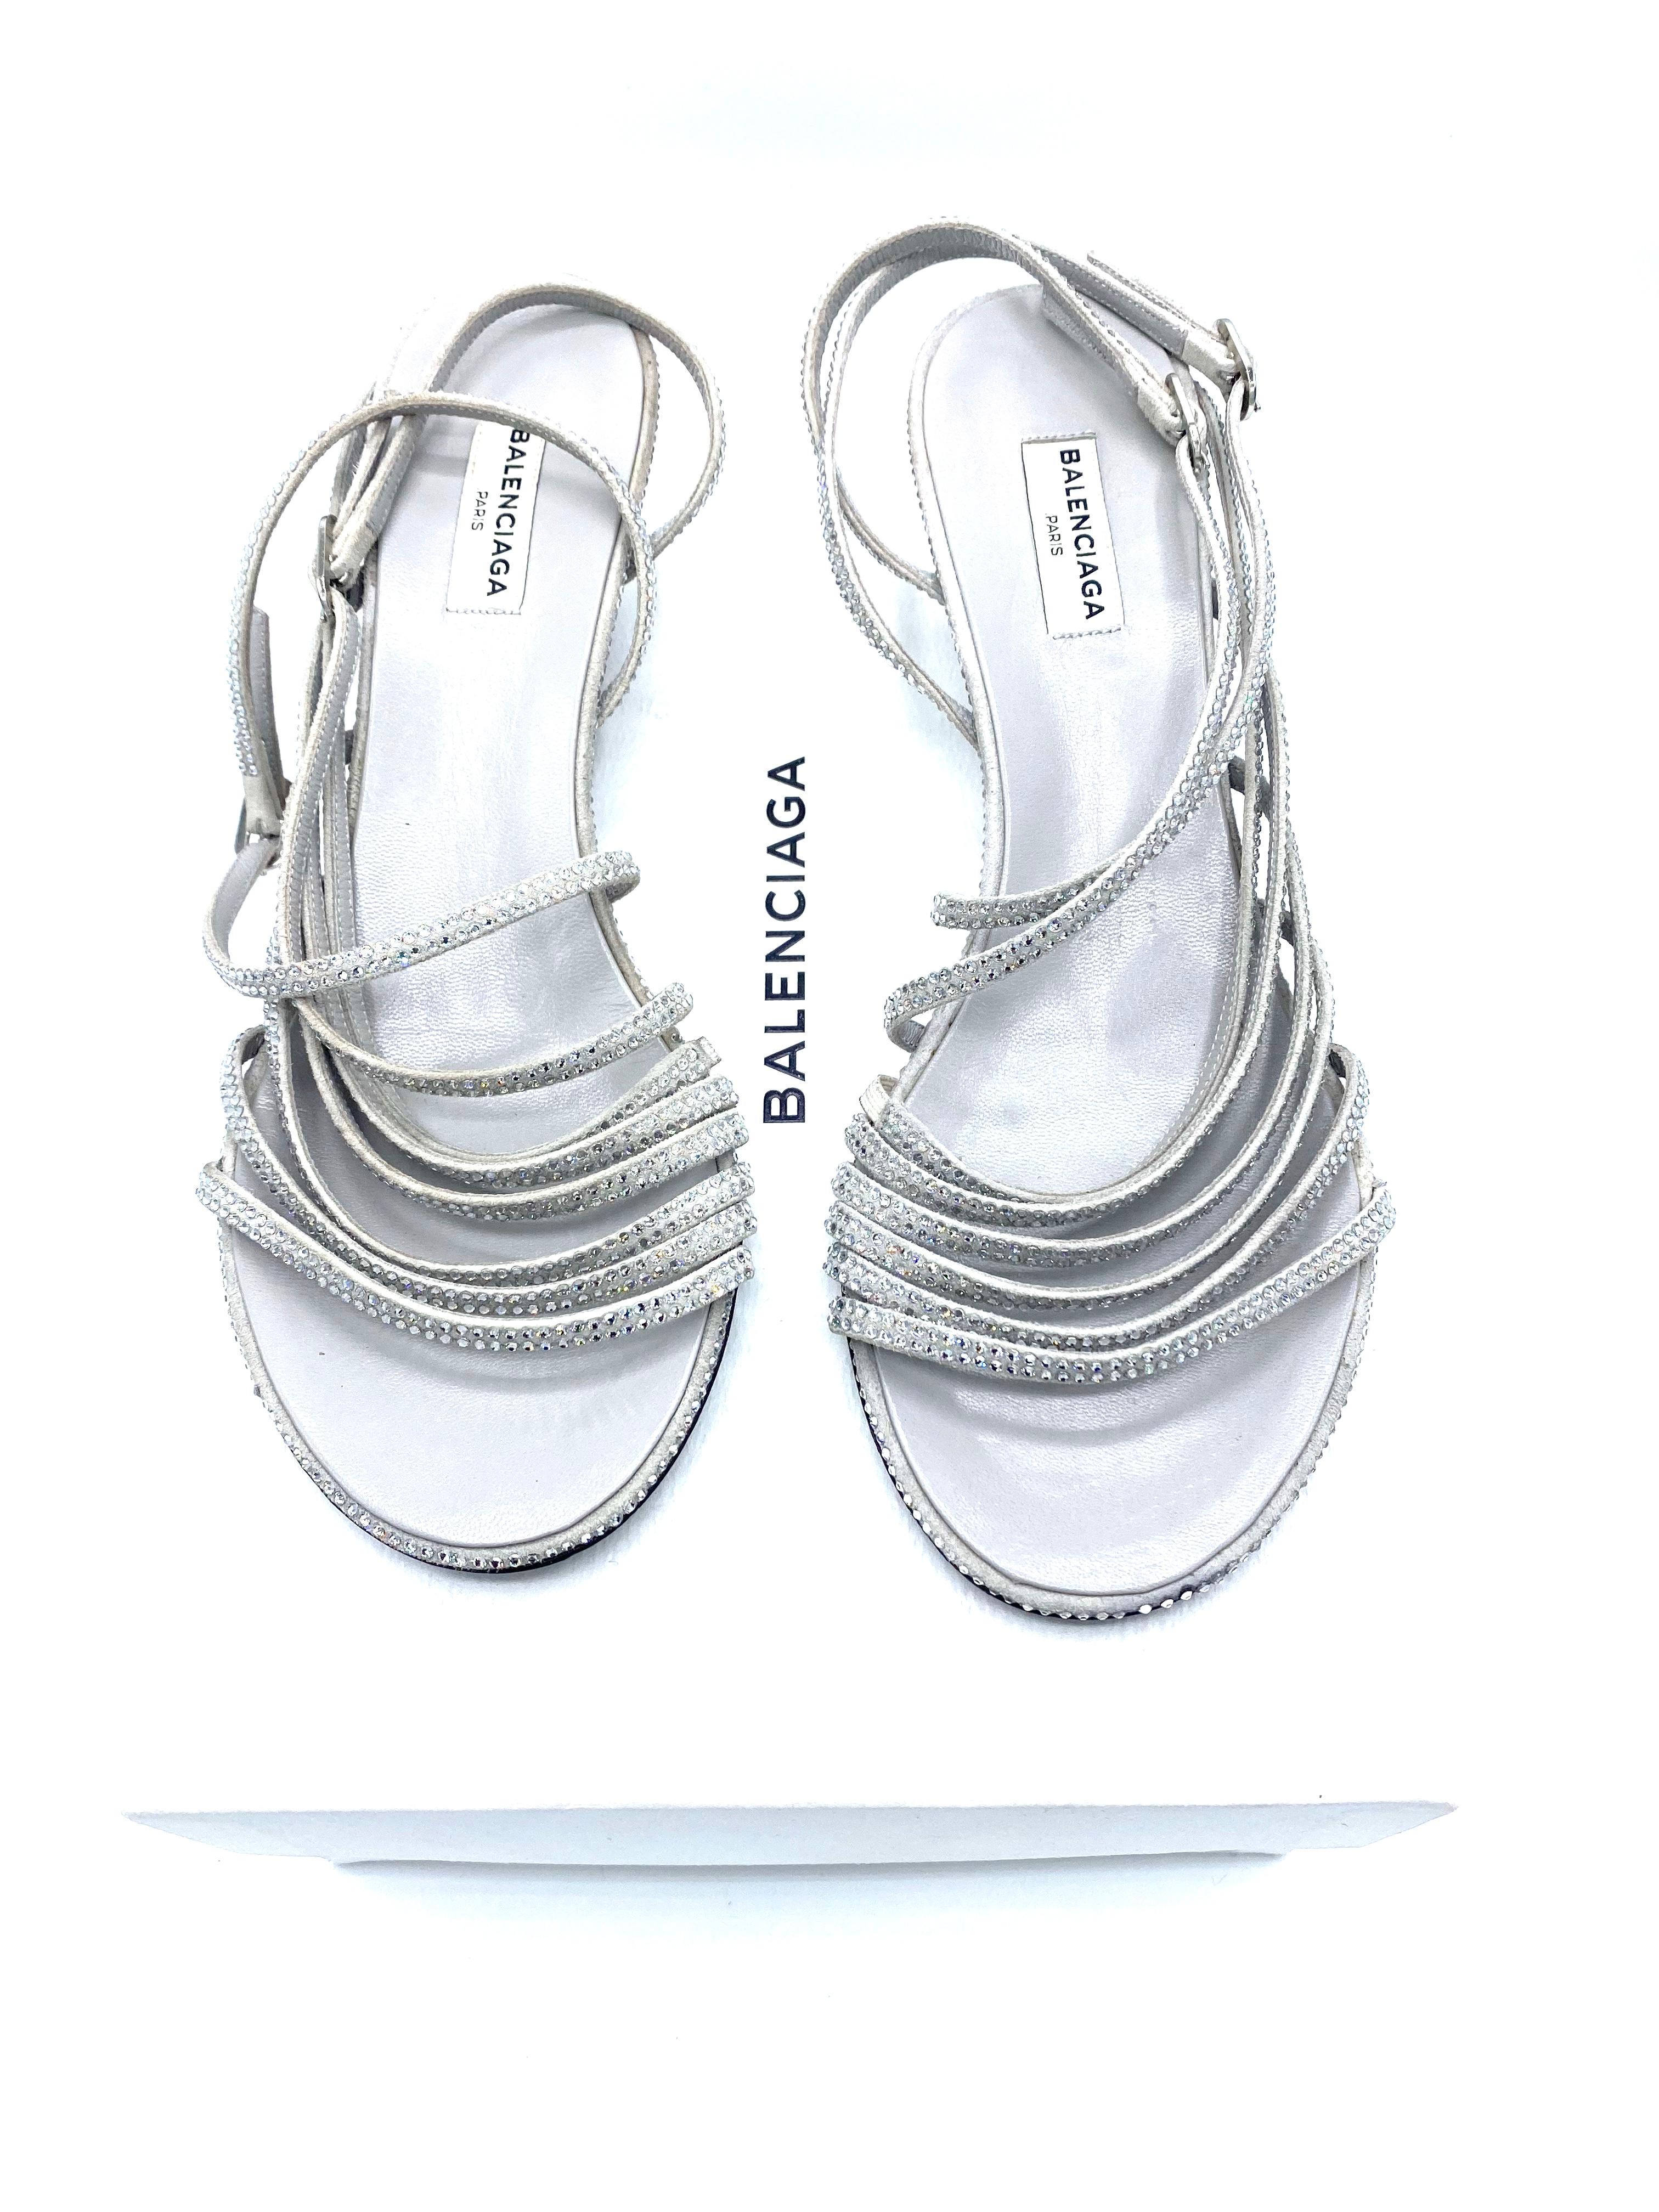 Balenciaga Crystal Embellished Grey Suede Strappy Heels Sandals Size 39  8